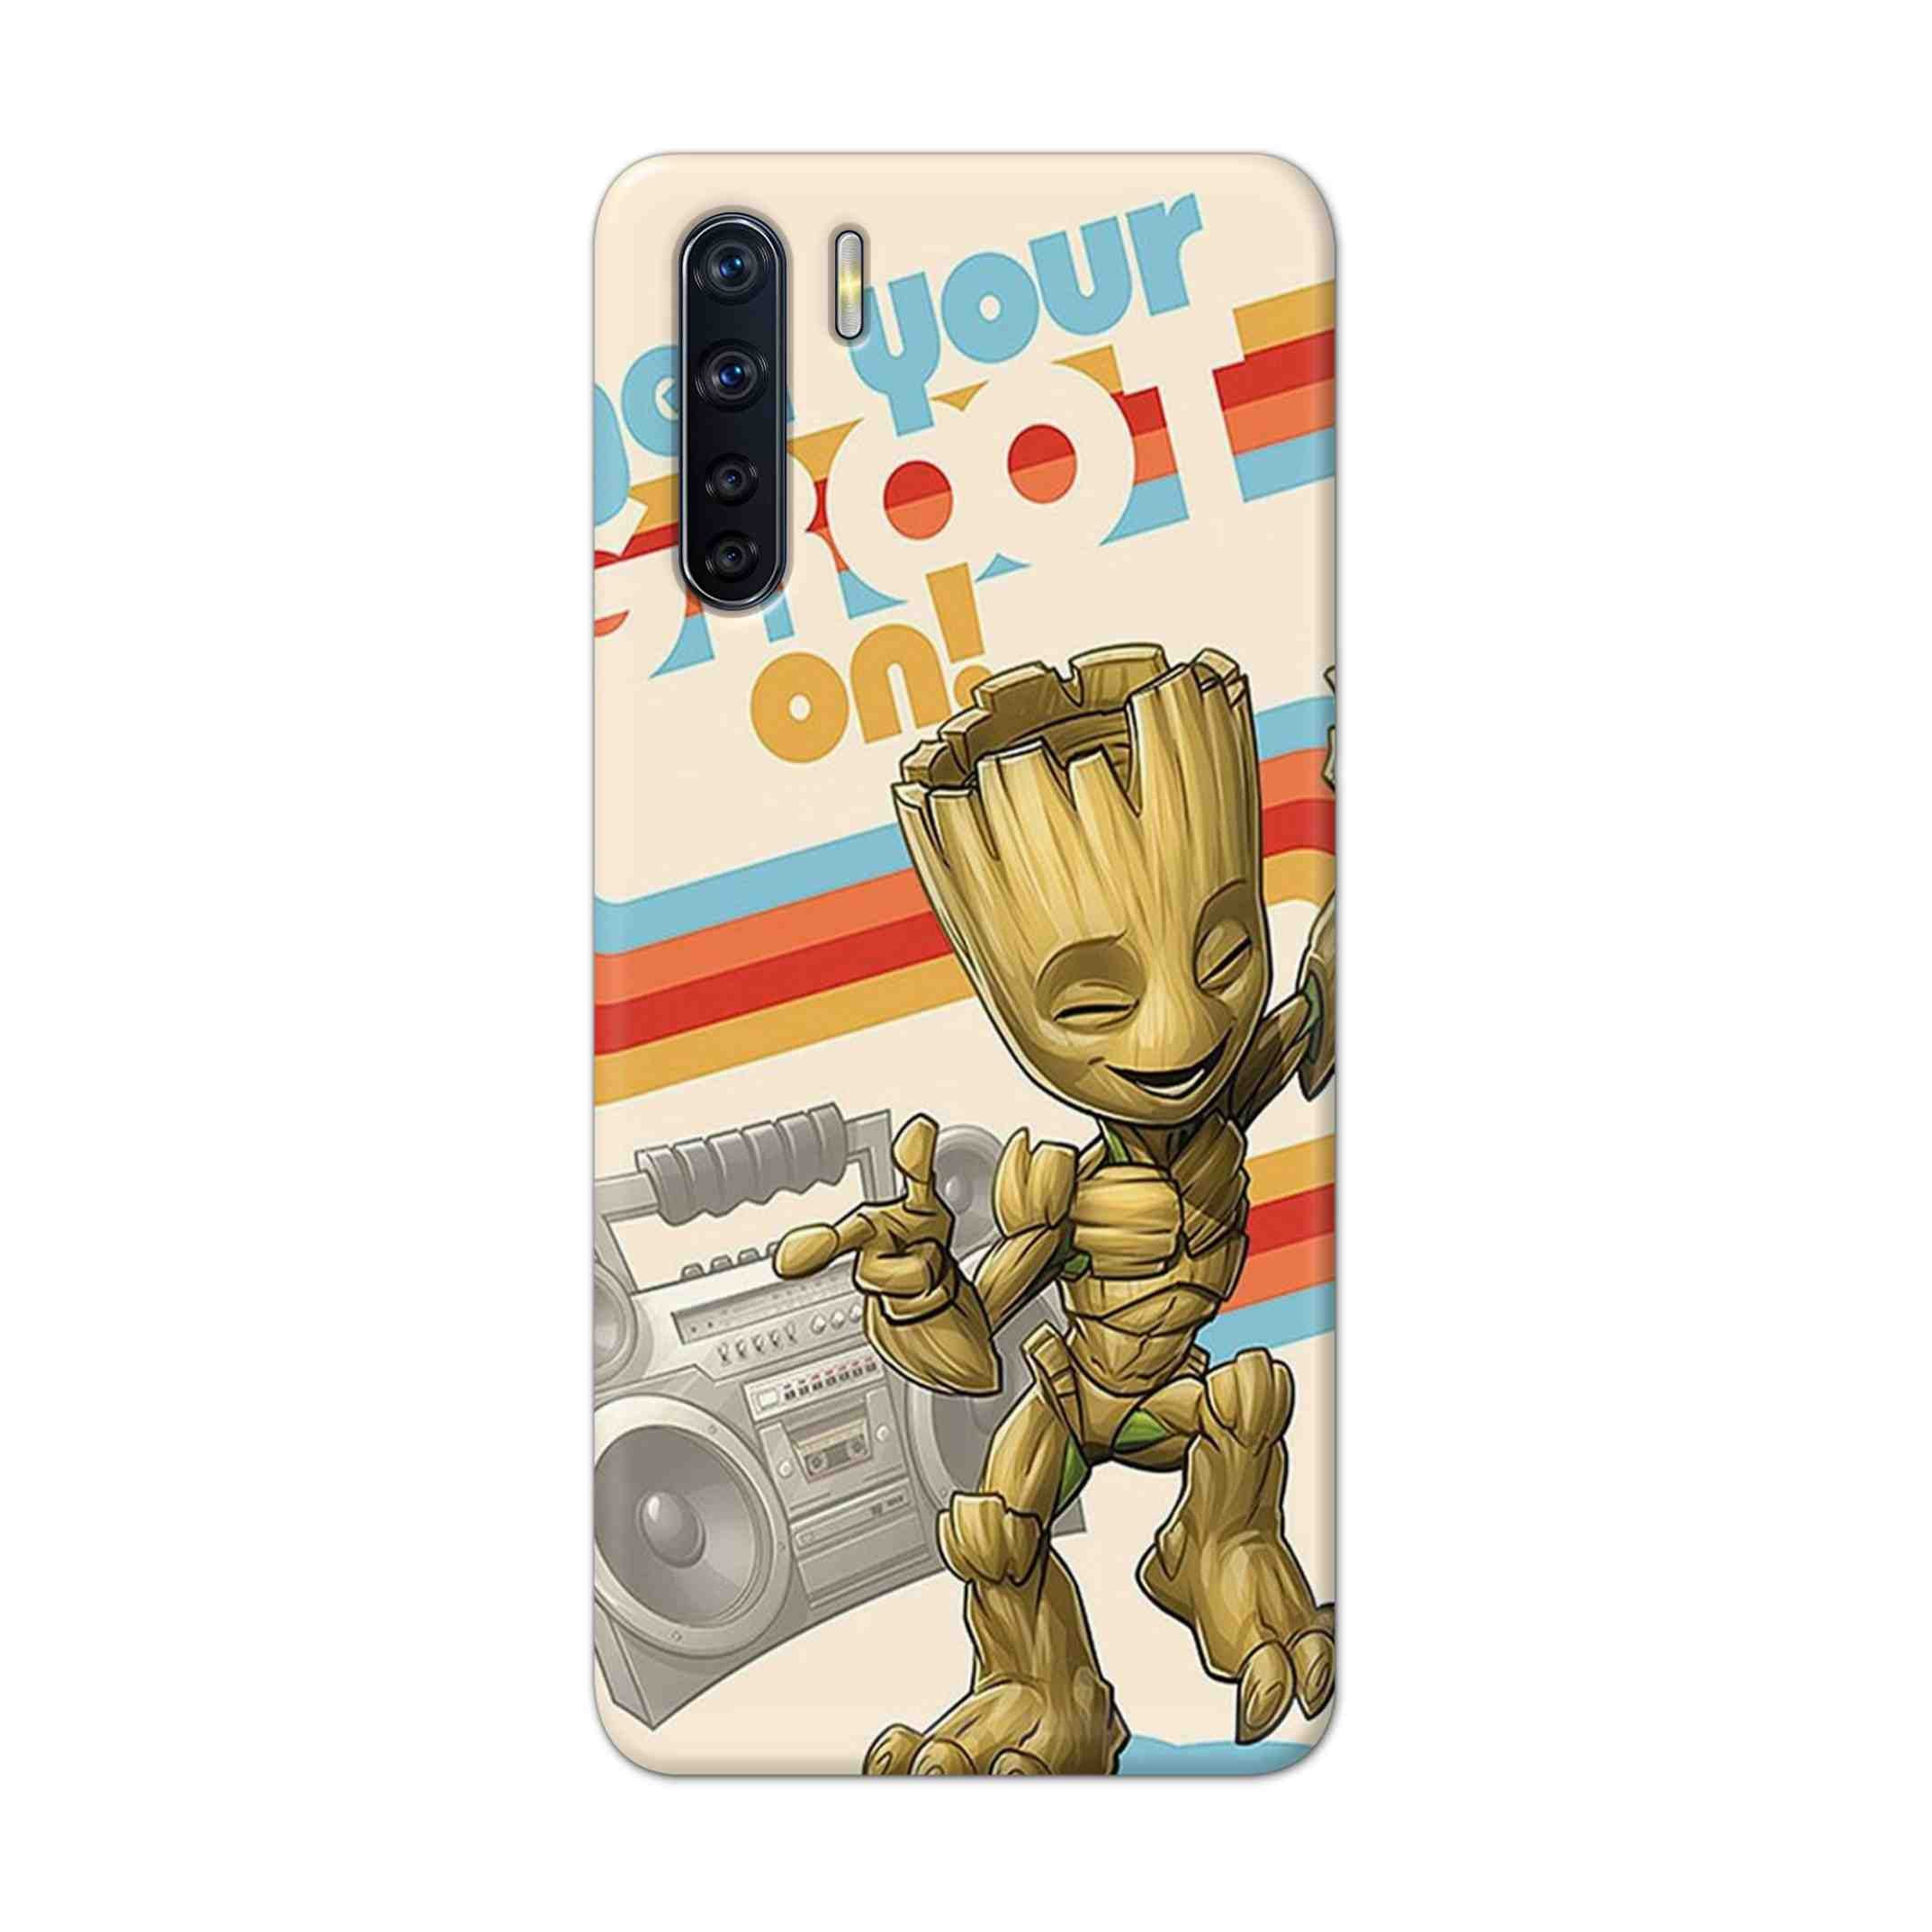 Buy Groot Hard Back Mobile Phone Case Cover For OPPO F15 Online